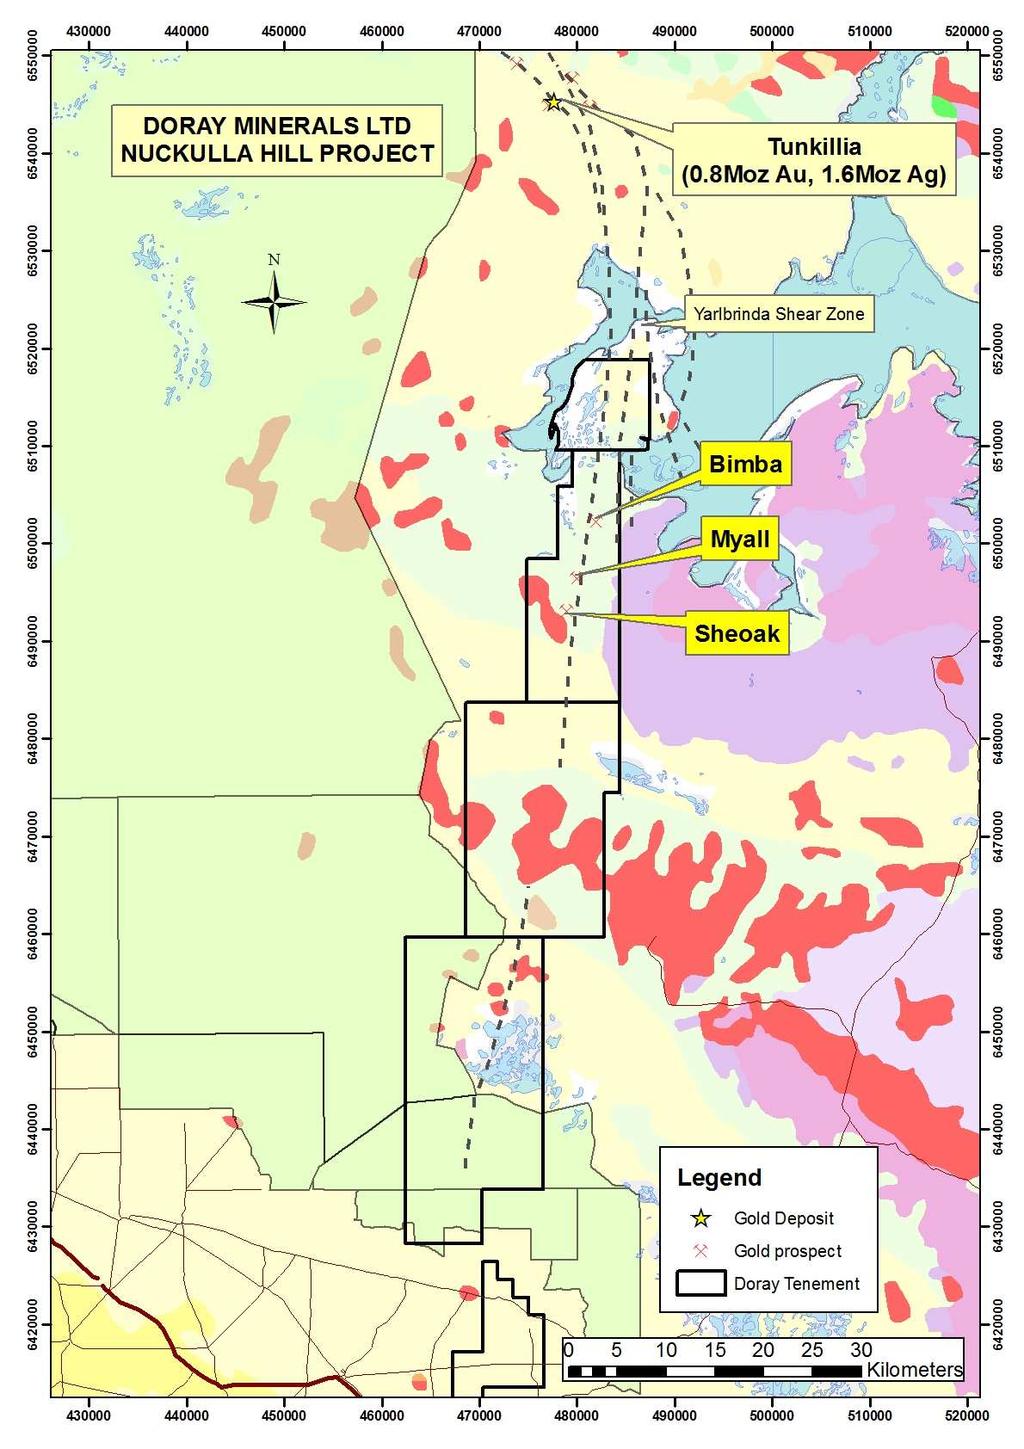 Nuckulla Hill 100km strike of mineralised Yarlbrinda Shear Zone 100% owned Adjacent to Tunkillia (0.8Moz Au, 1.